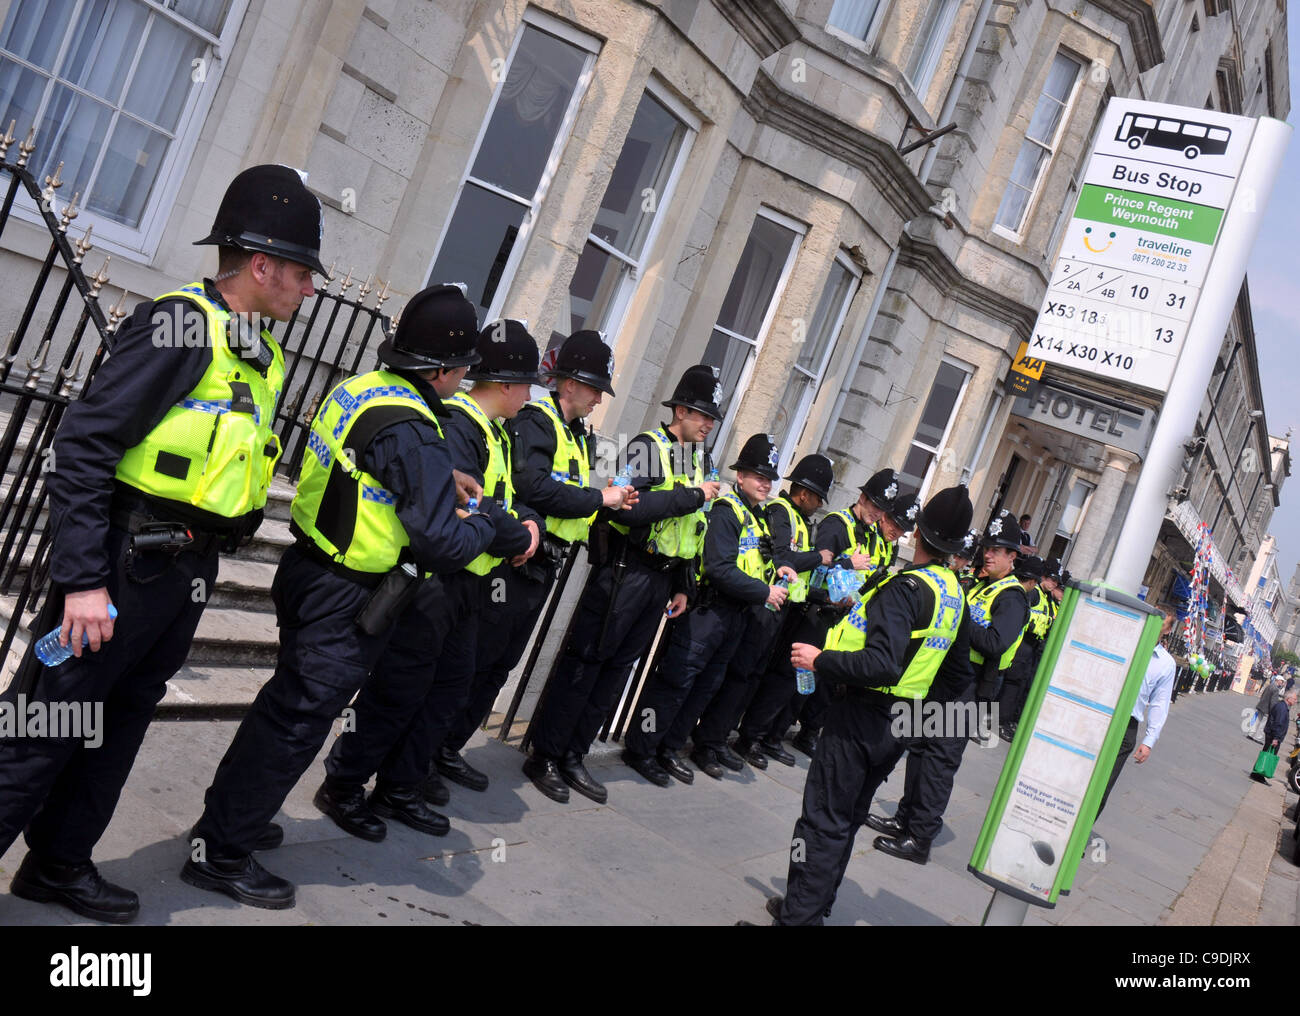 Polizisten an einer Bushaltestelle, England, UK Stockfoto